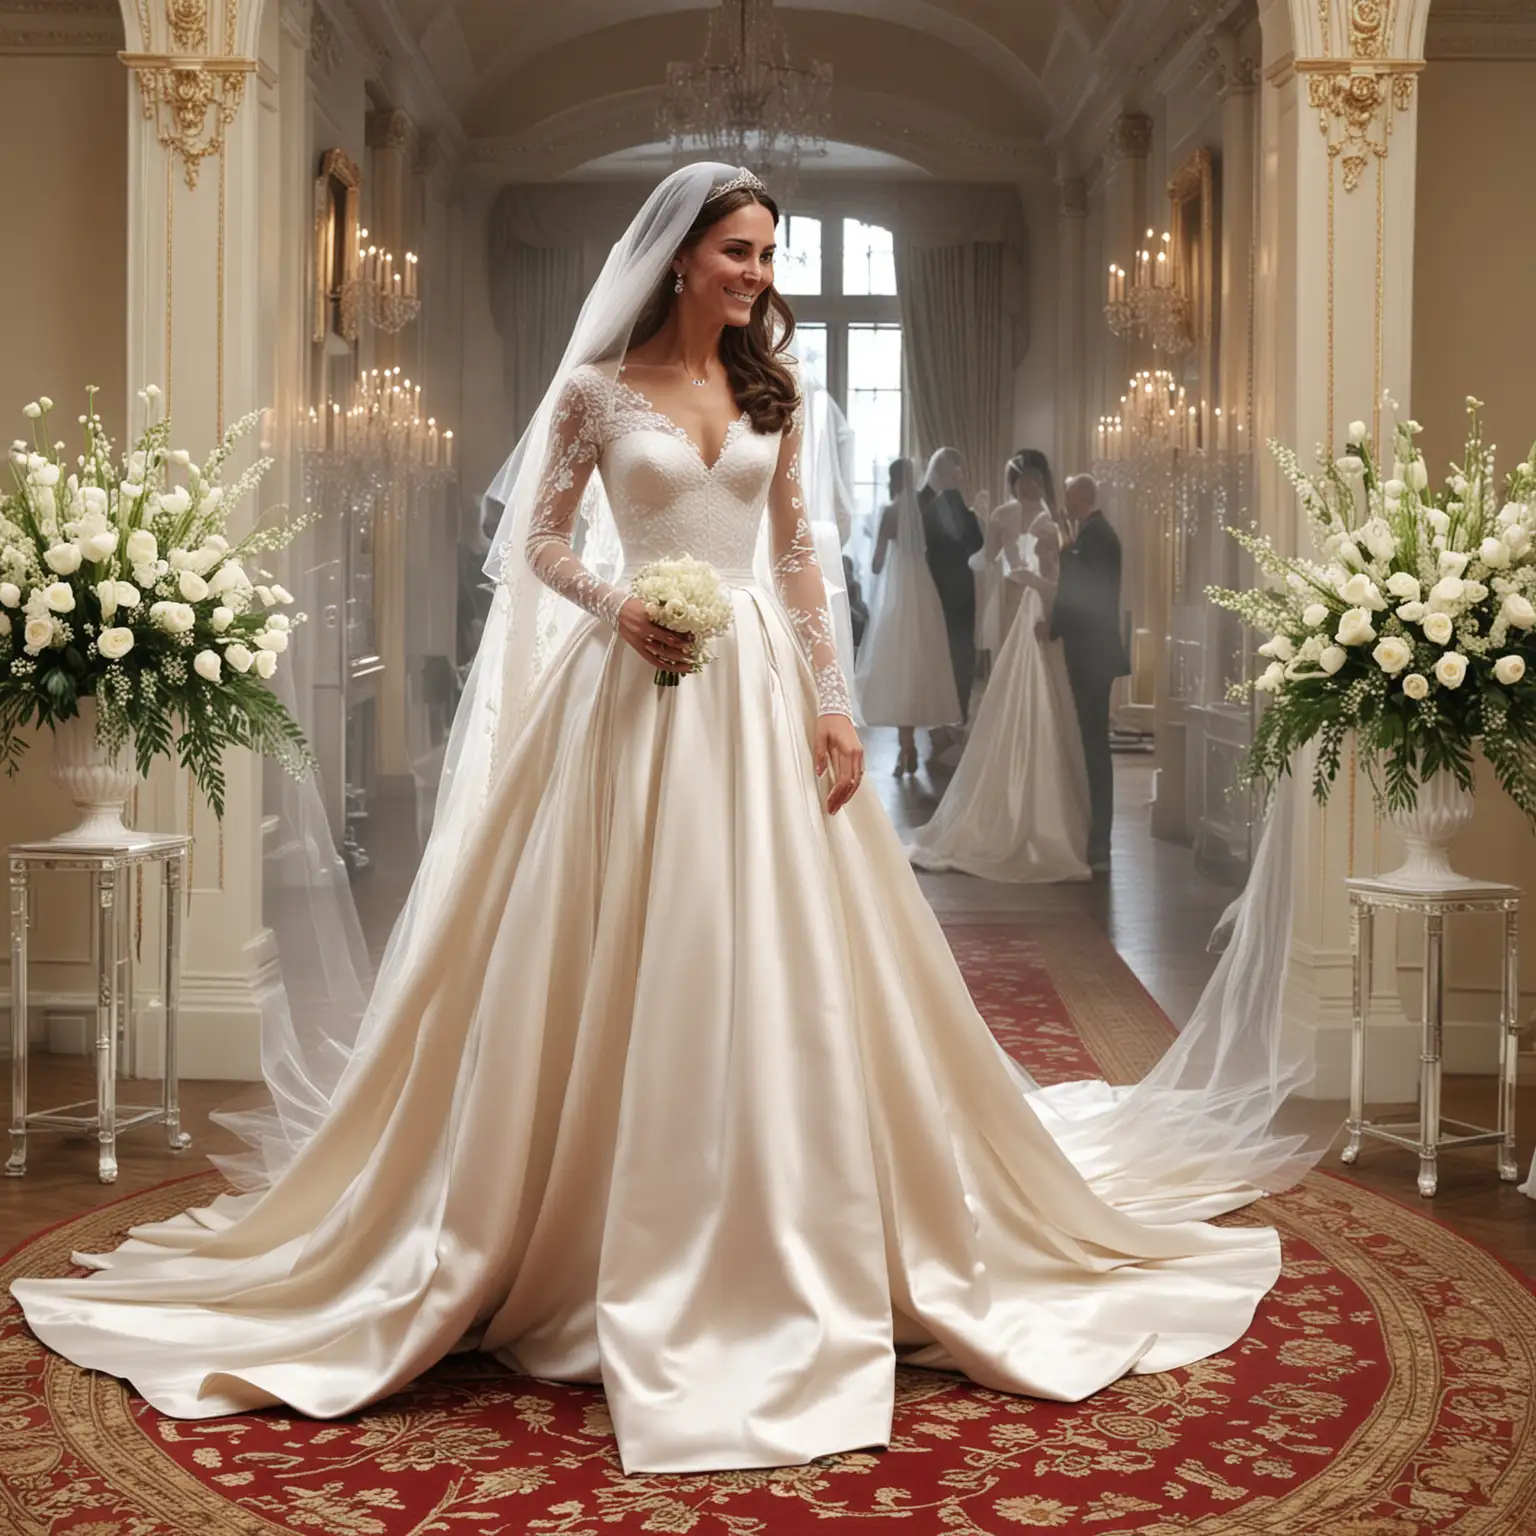 Kate Middleton Welcomes Boyfriend in Luxurious Princess Wedding Dress